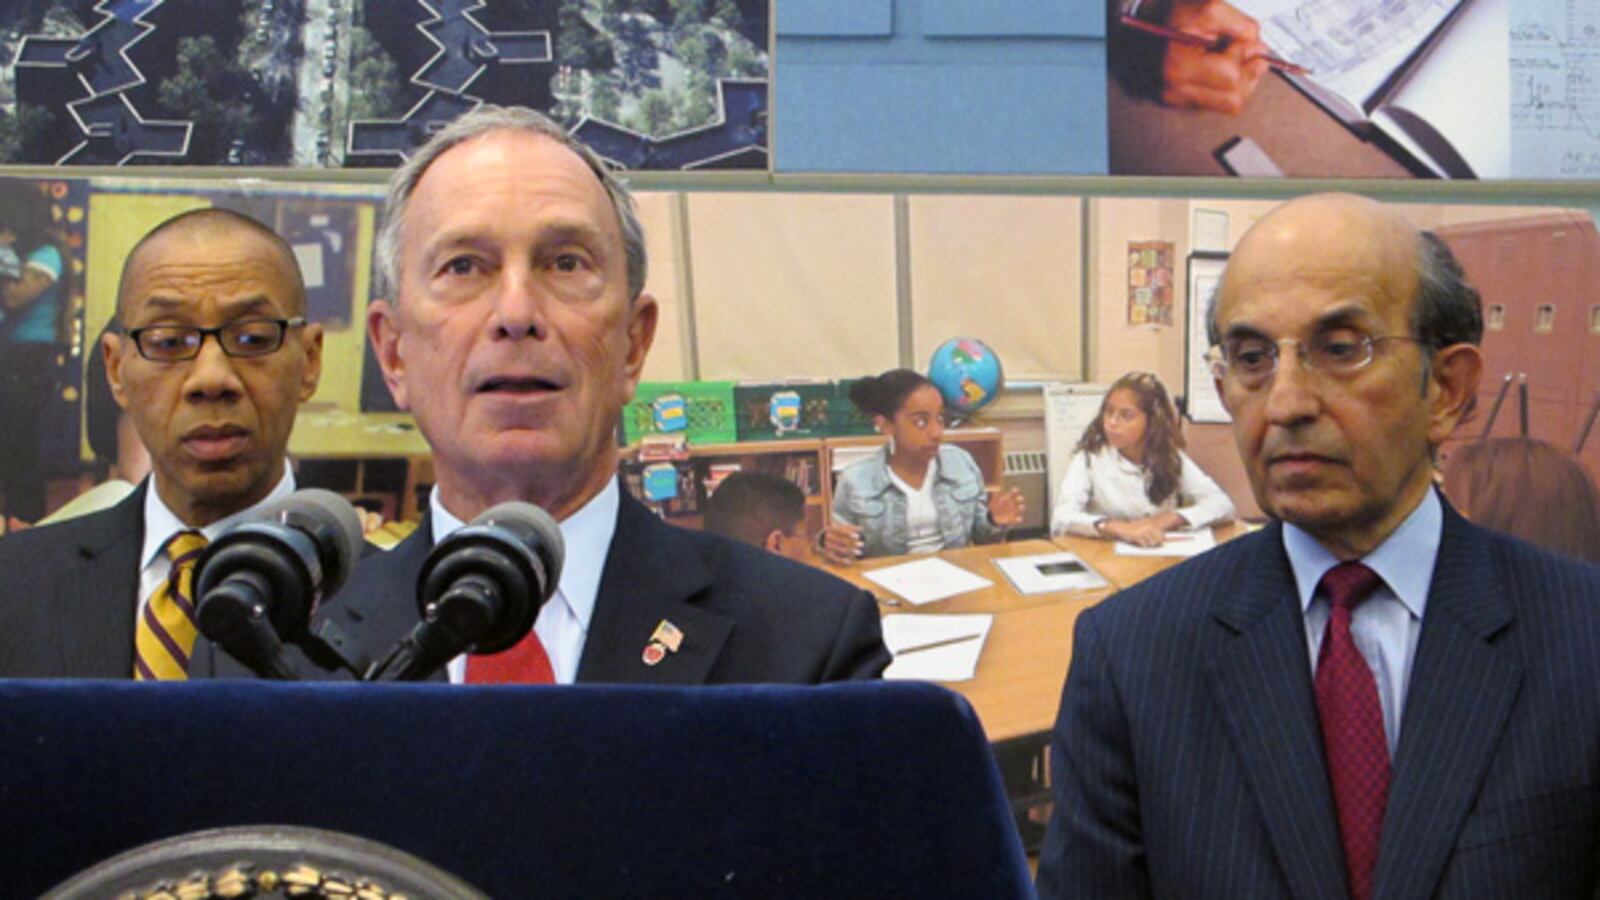 Former Mayor Michael Bloomberg, flanked by former Deputy Mayor Dennis Walcott and Schools Chancellor Joel Klein in 2010.